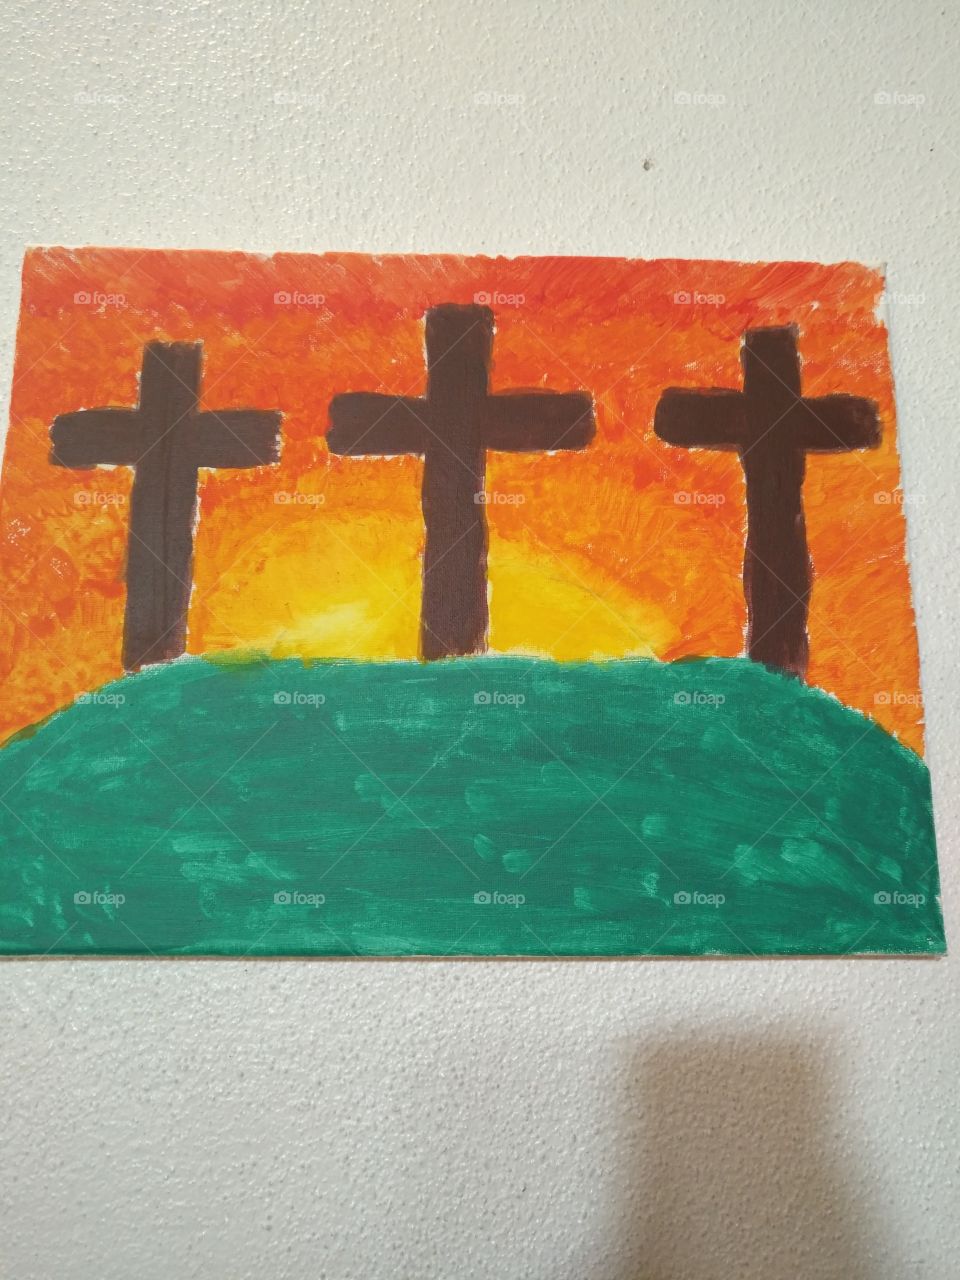 my painting cross